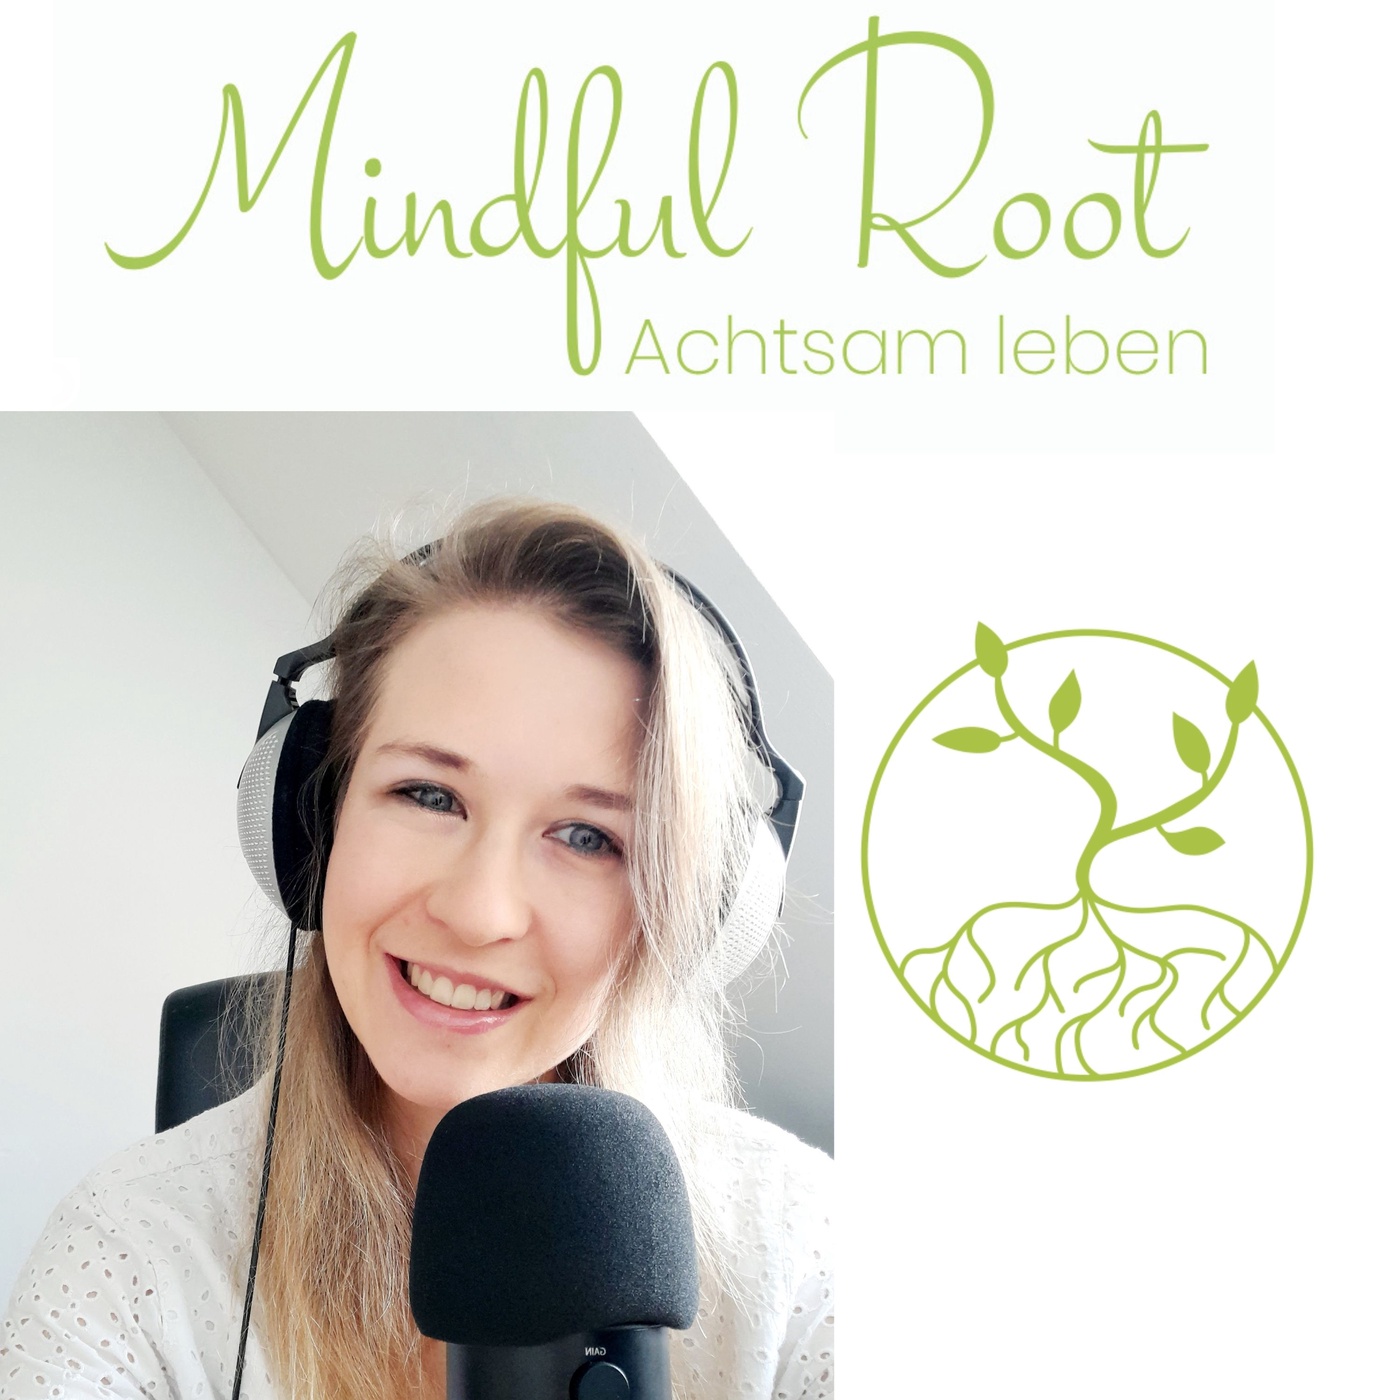 Mindful Root - achtsam leben